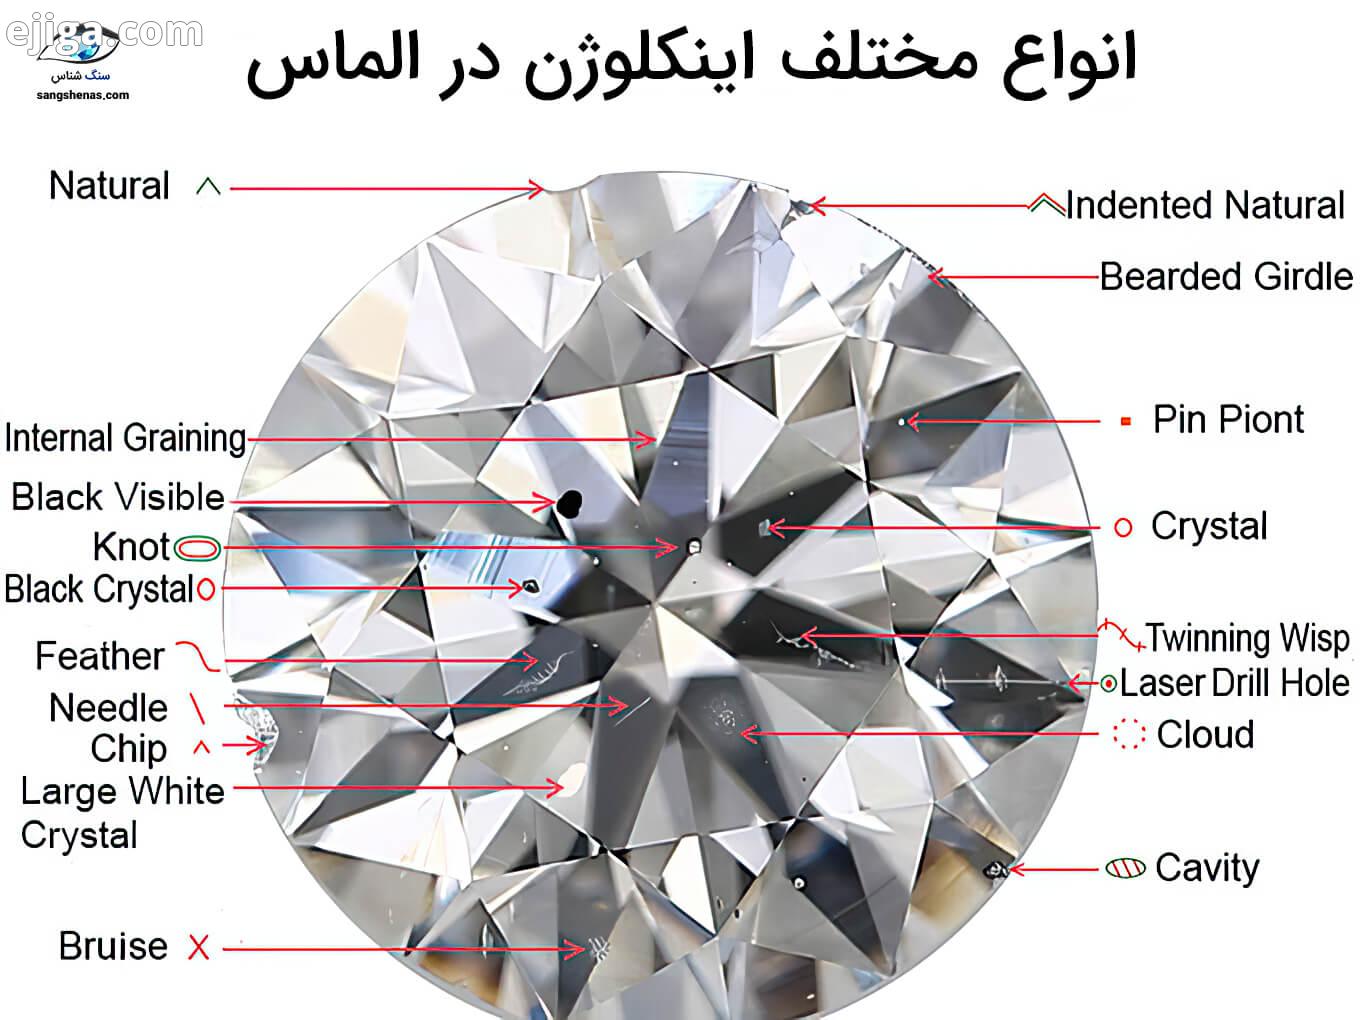 انوع مختلف اینکلوژن در الماس